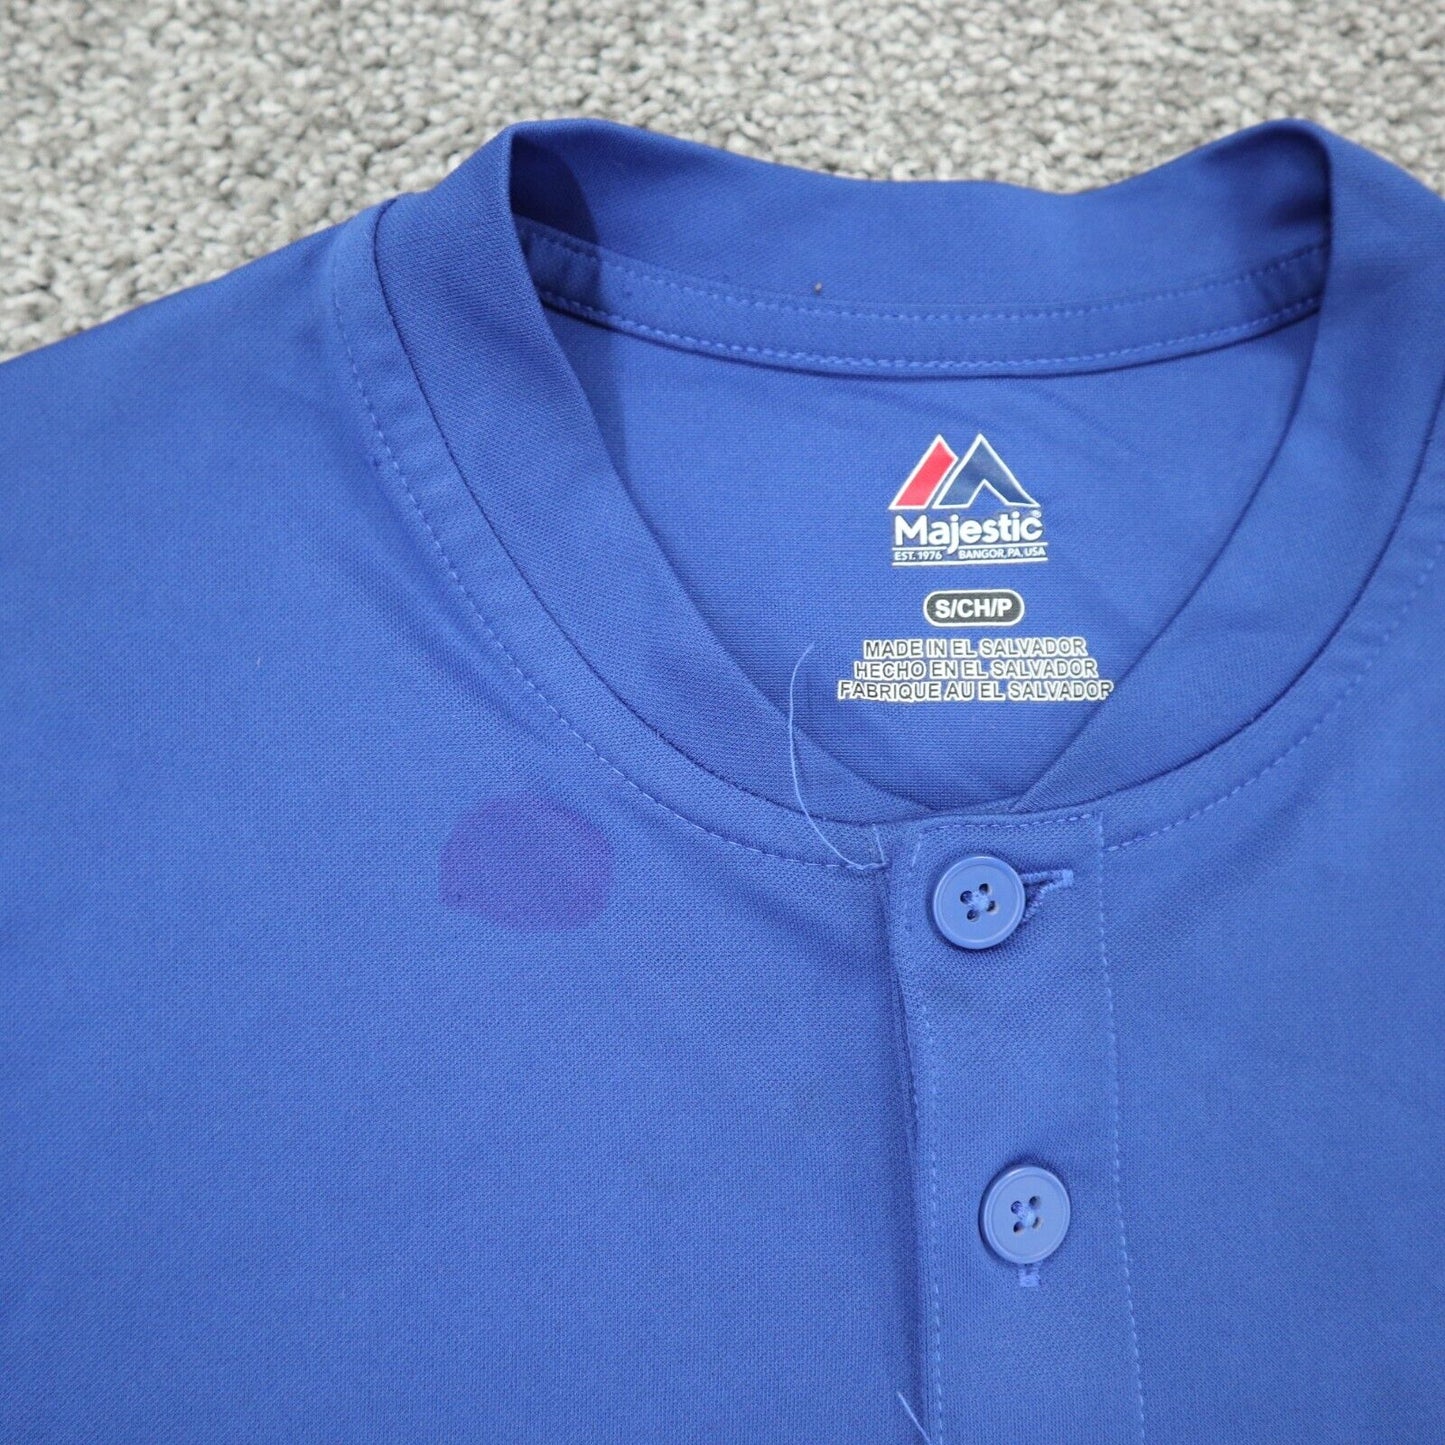 Majestic Texas Rangers #7 MLB Baseball Jersey T Shirt Boys Tow Button Blue Small